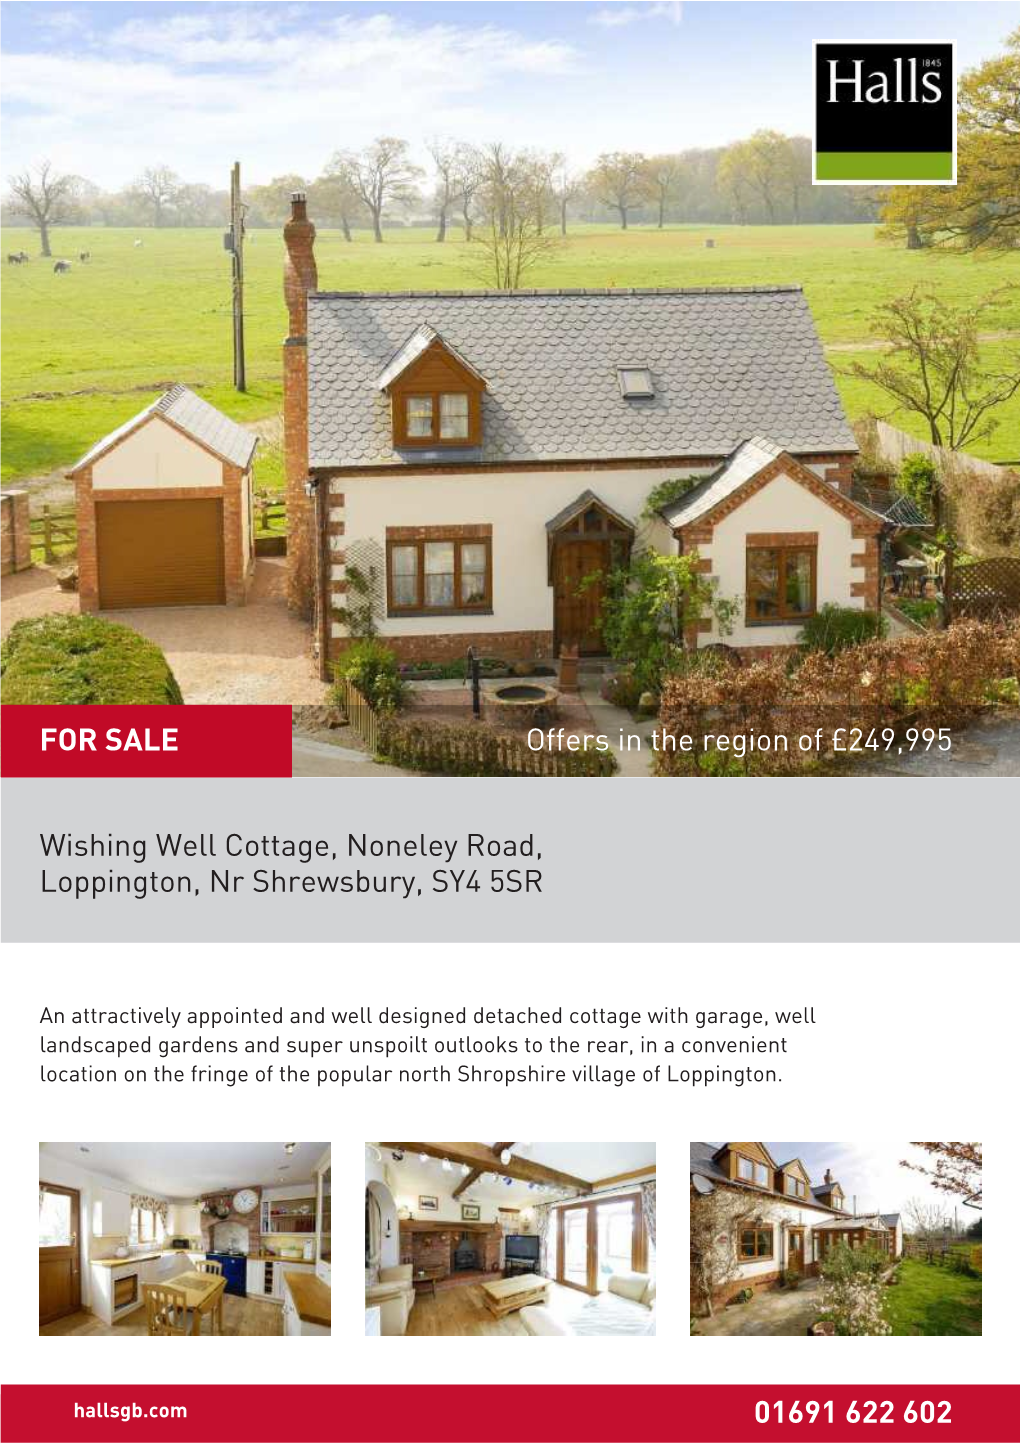 Wishing Well Cottage, Noneley Road, Loppington, Nr Shrewsbury, SY4 5SR